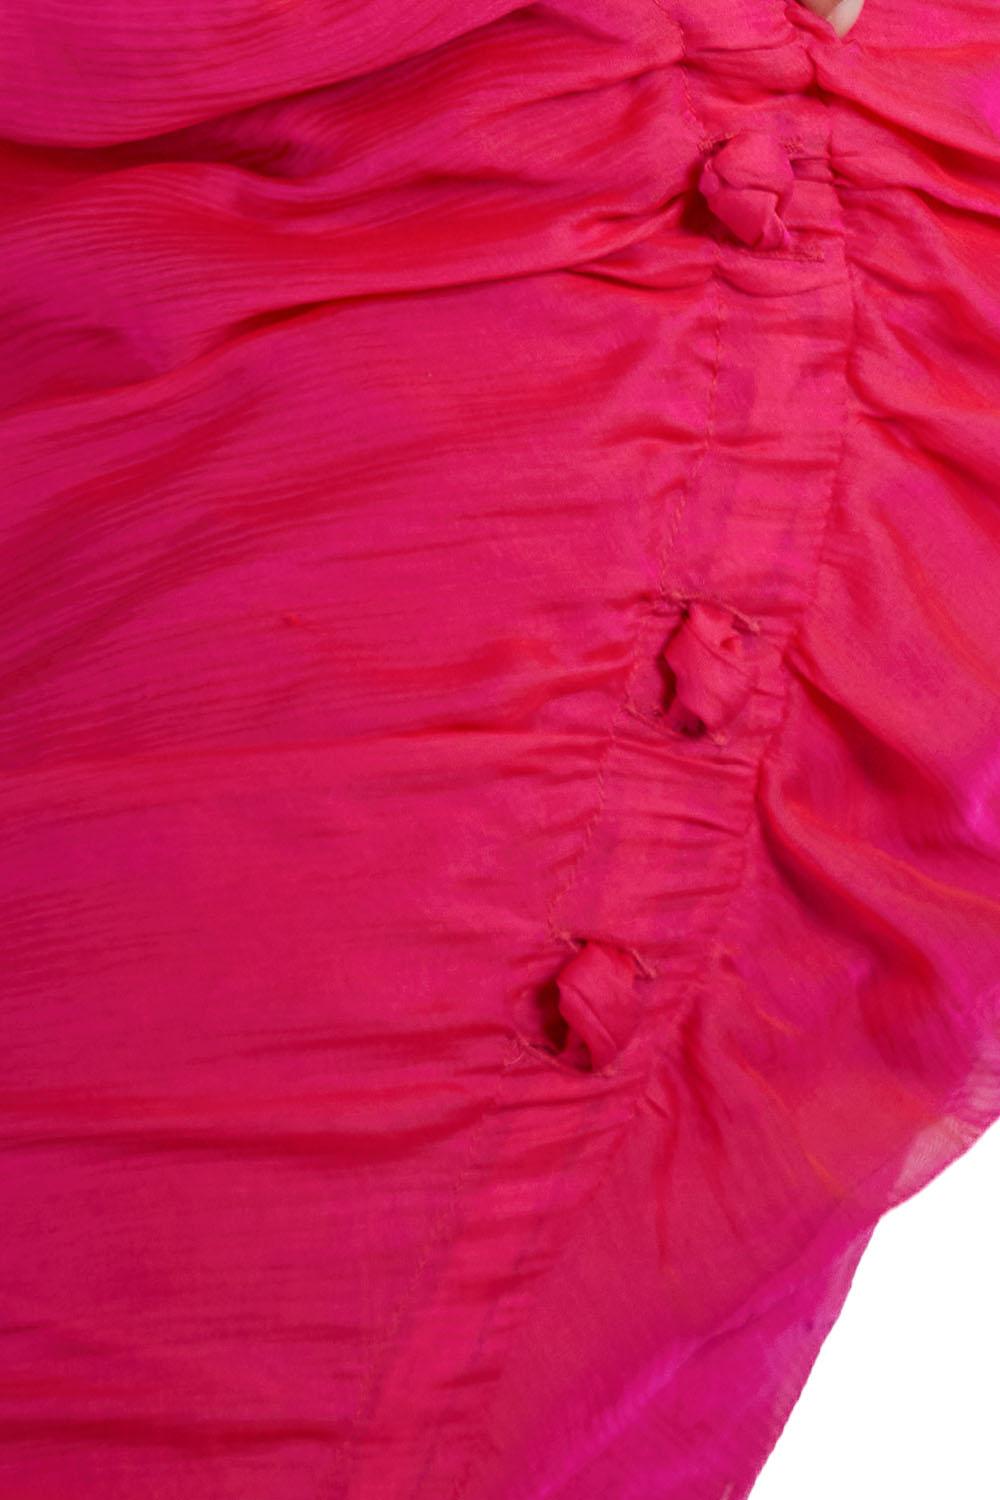 2000S EMANUEL UNGARO Hot Pink Silk Chiffon Beyonce Era Cocktail Dress For Sale 6